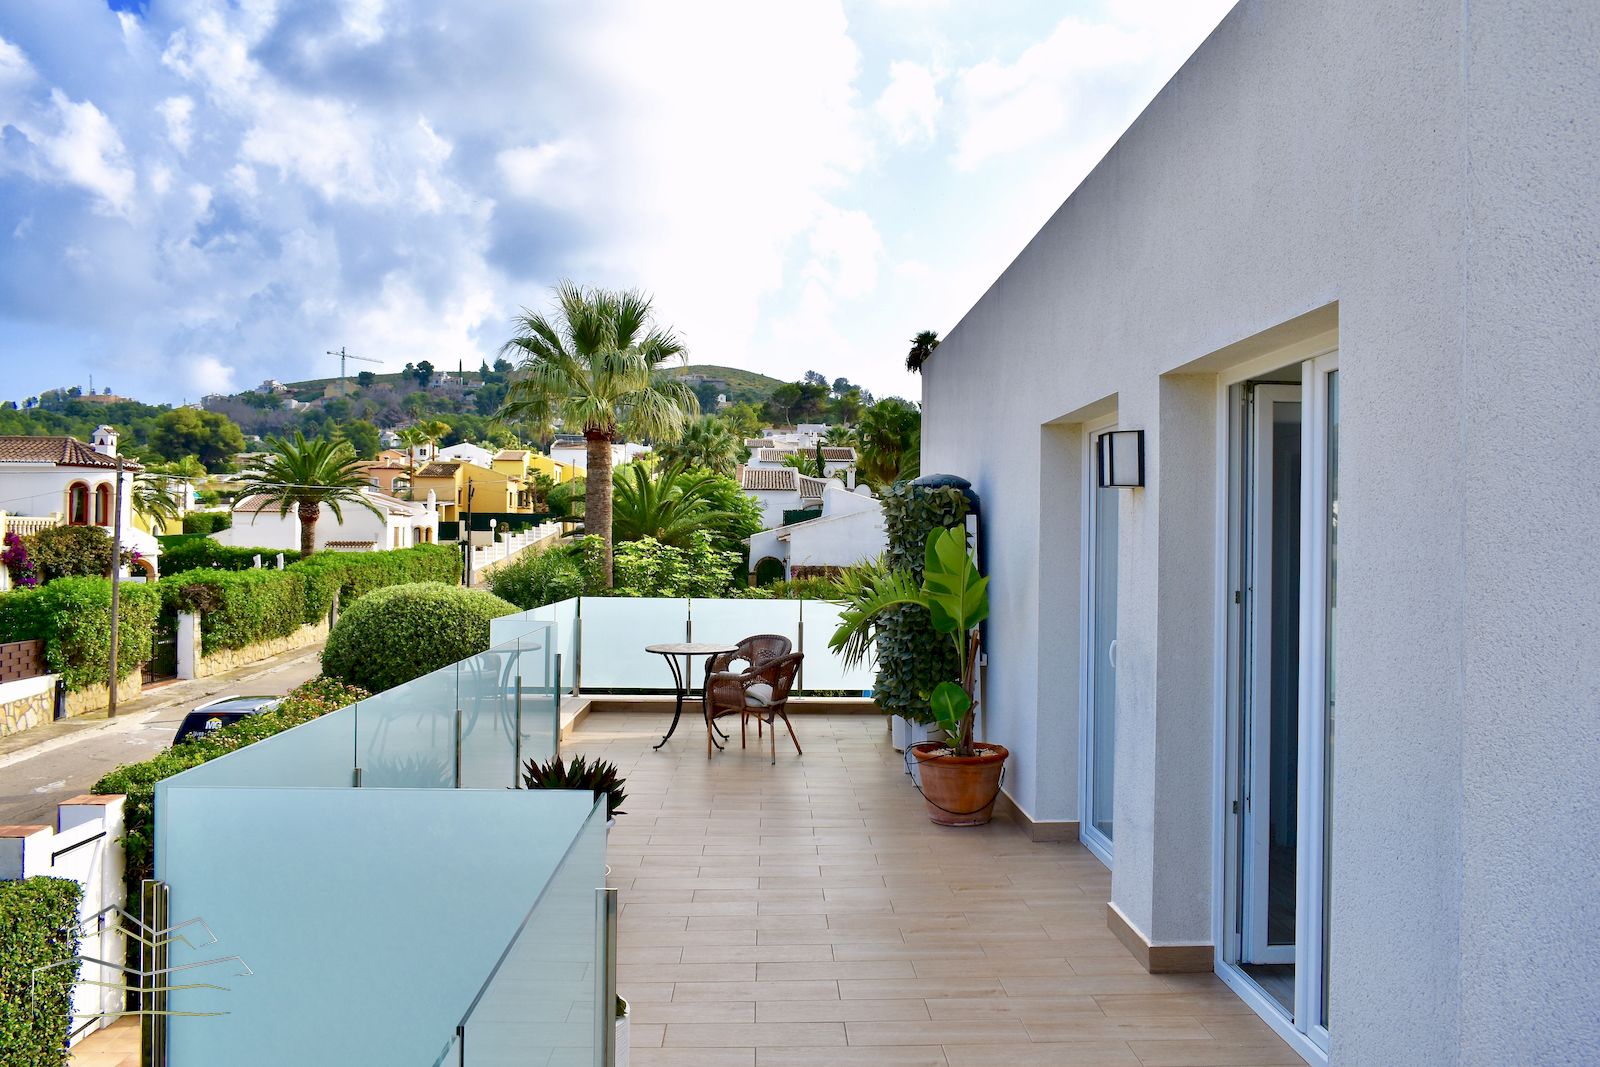 Exclusive and modern villa for sale in Pinosol - Javea - Costa Blanca